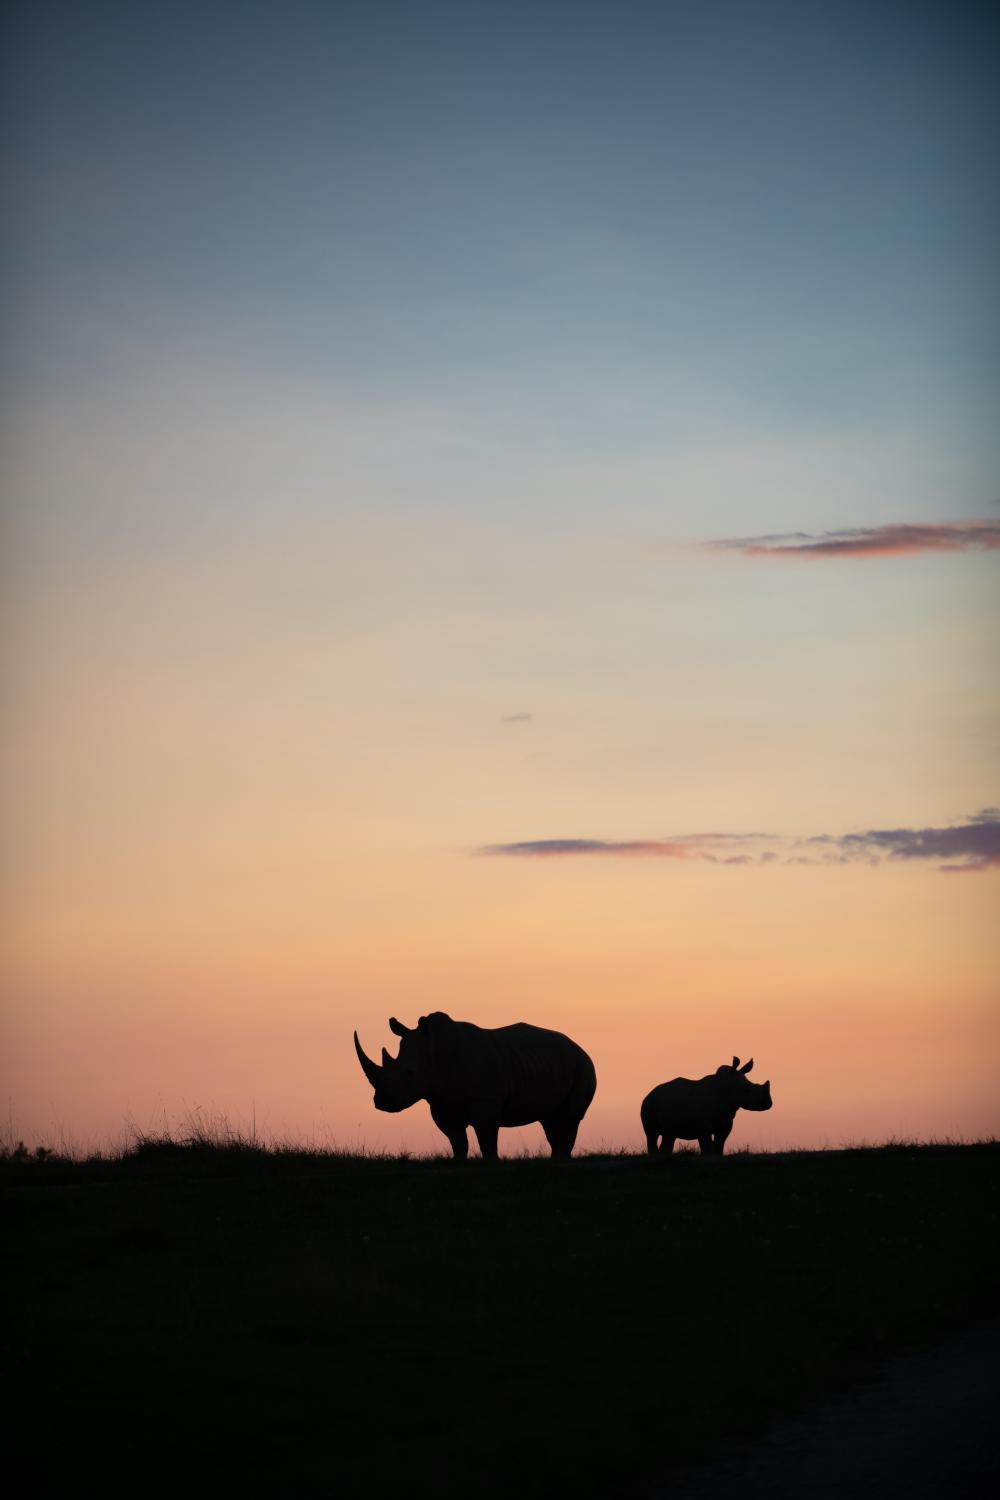 Rhinos at night